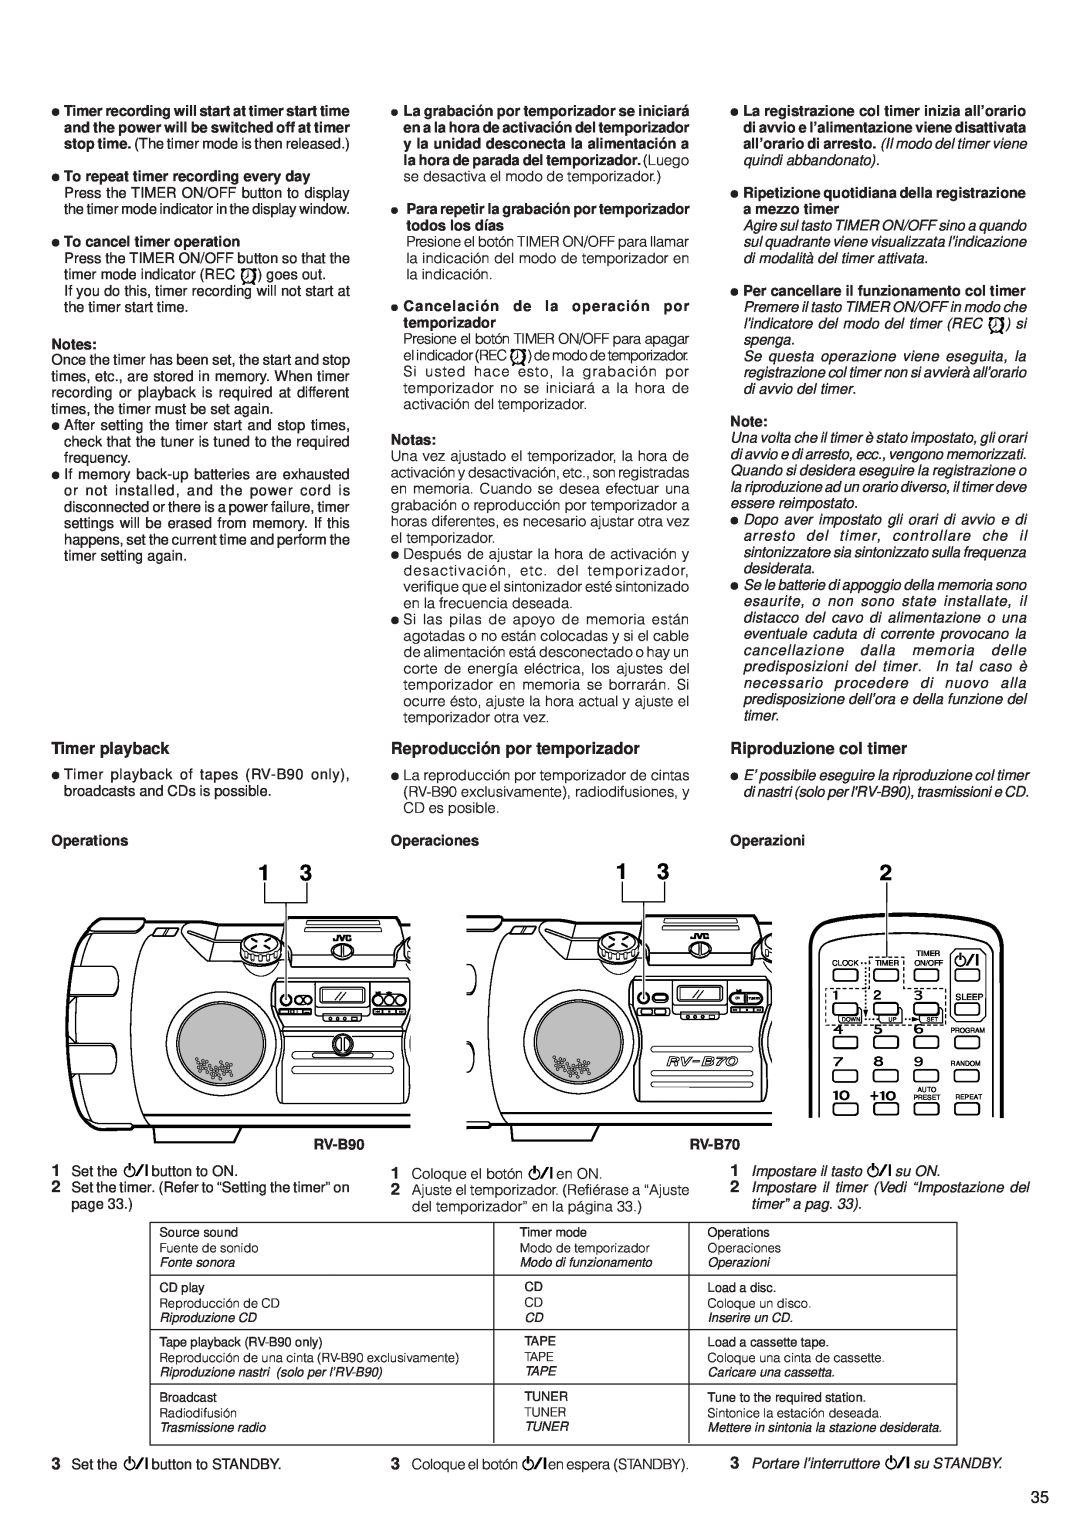 JVC RV-B90, RV-B70 manual Timer playback, Reproducción por temporizador, Riproduzione col timer 